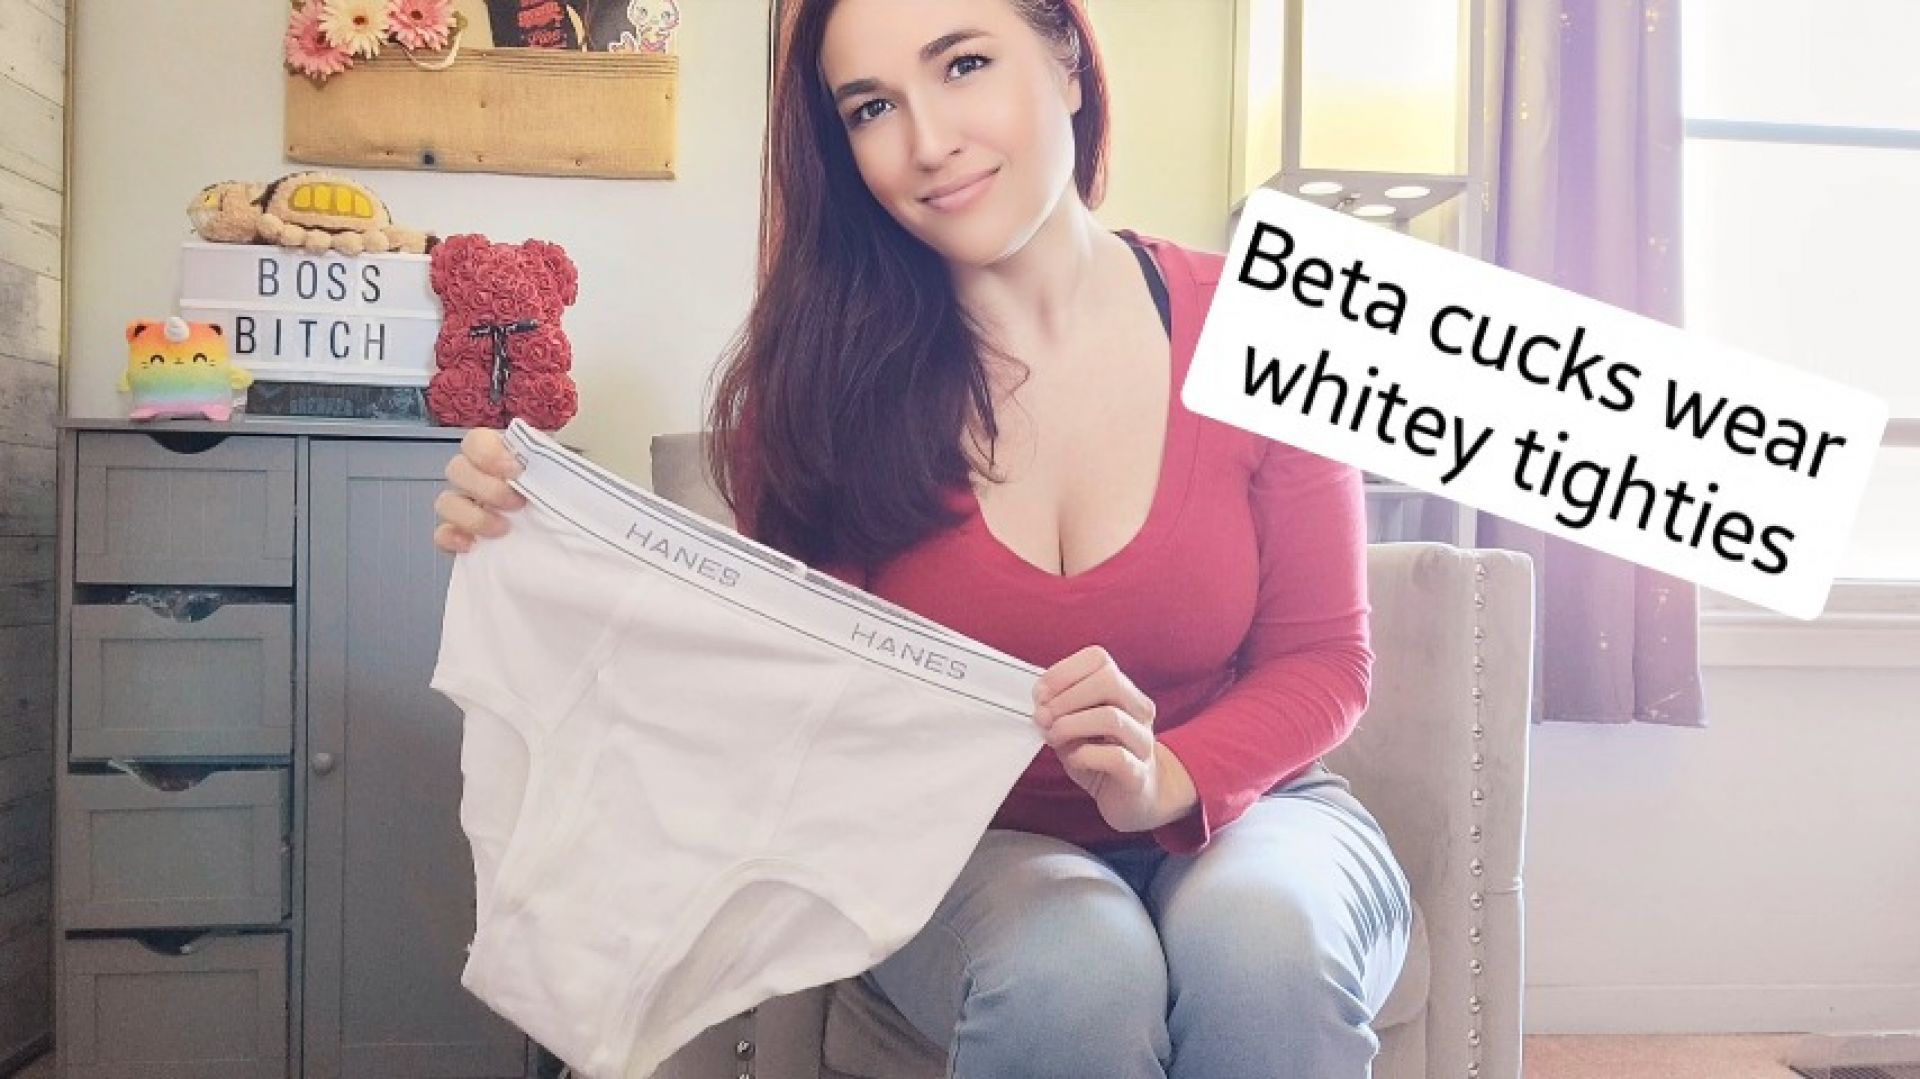 Beta cucks wear whitey tighties